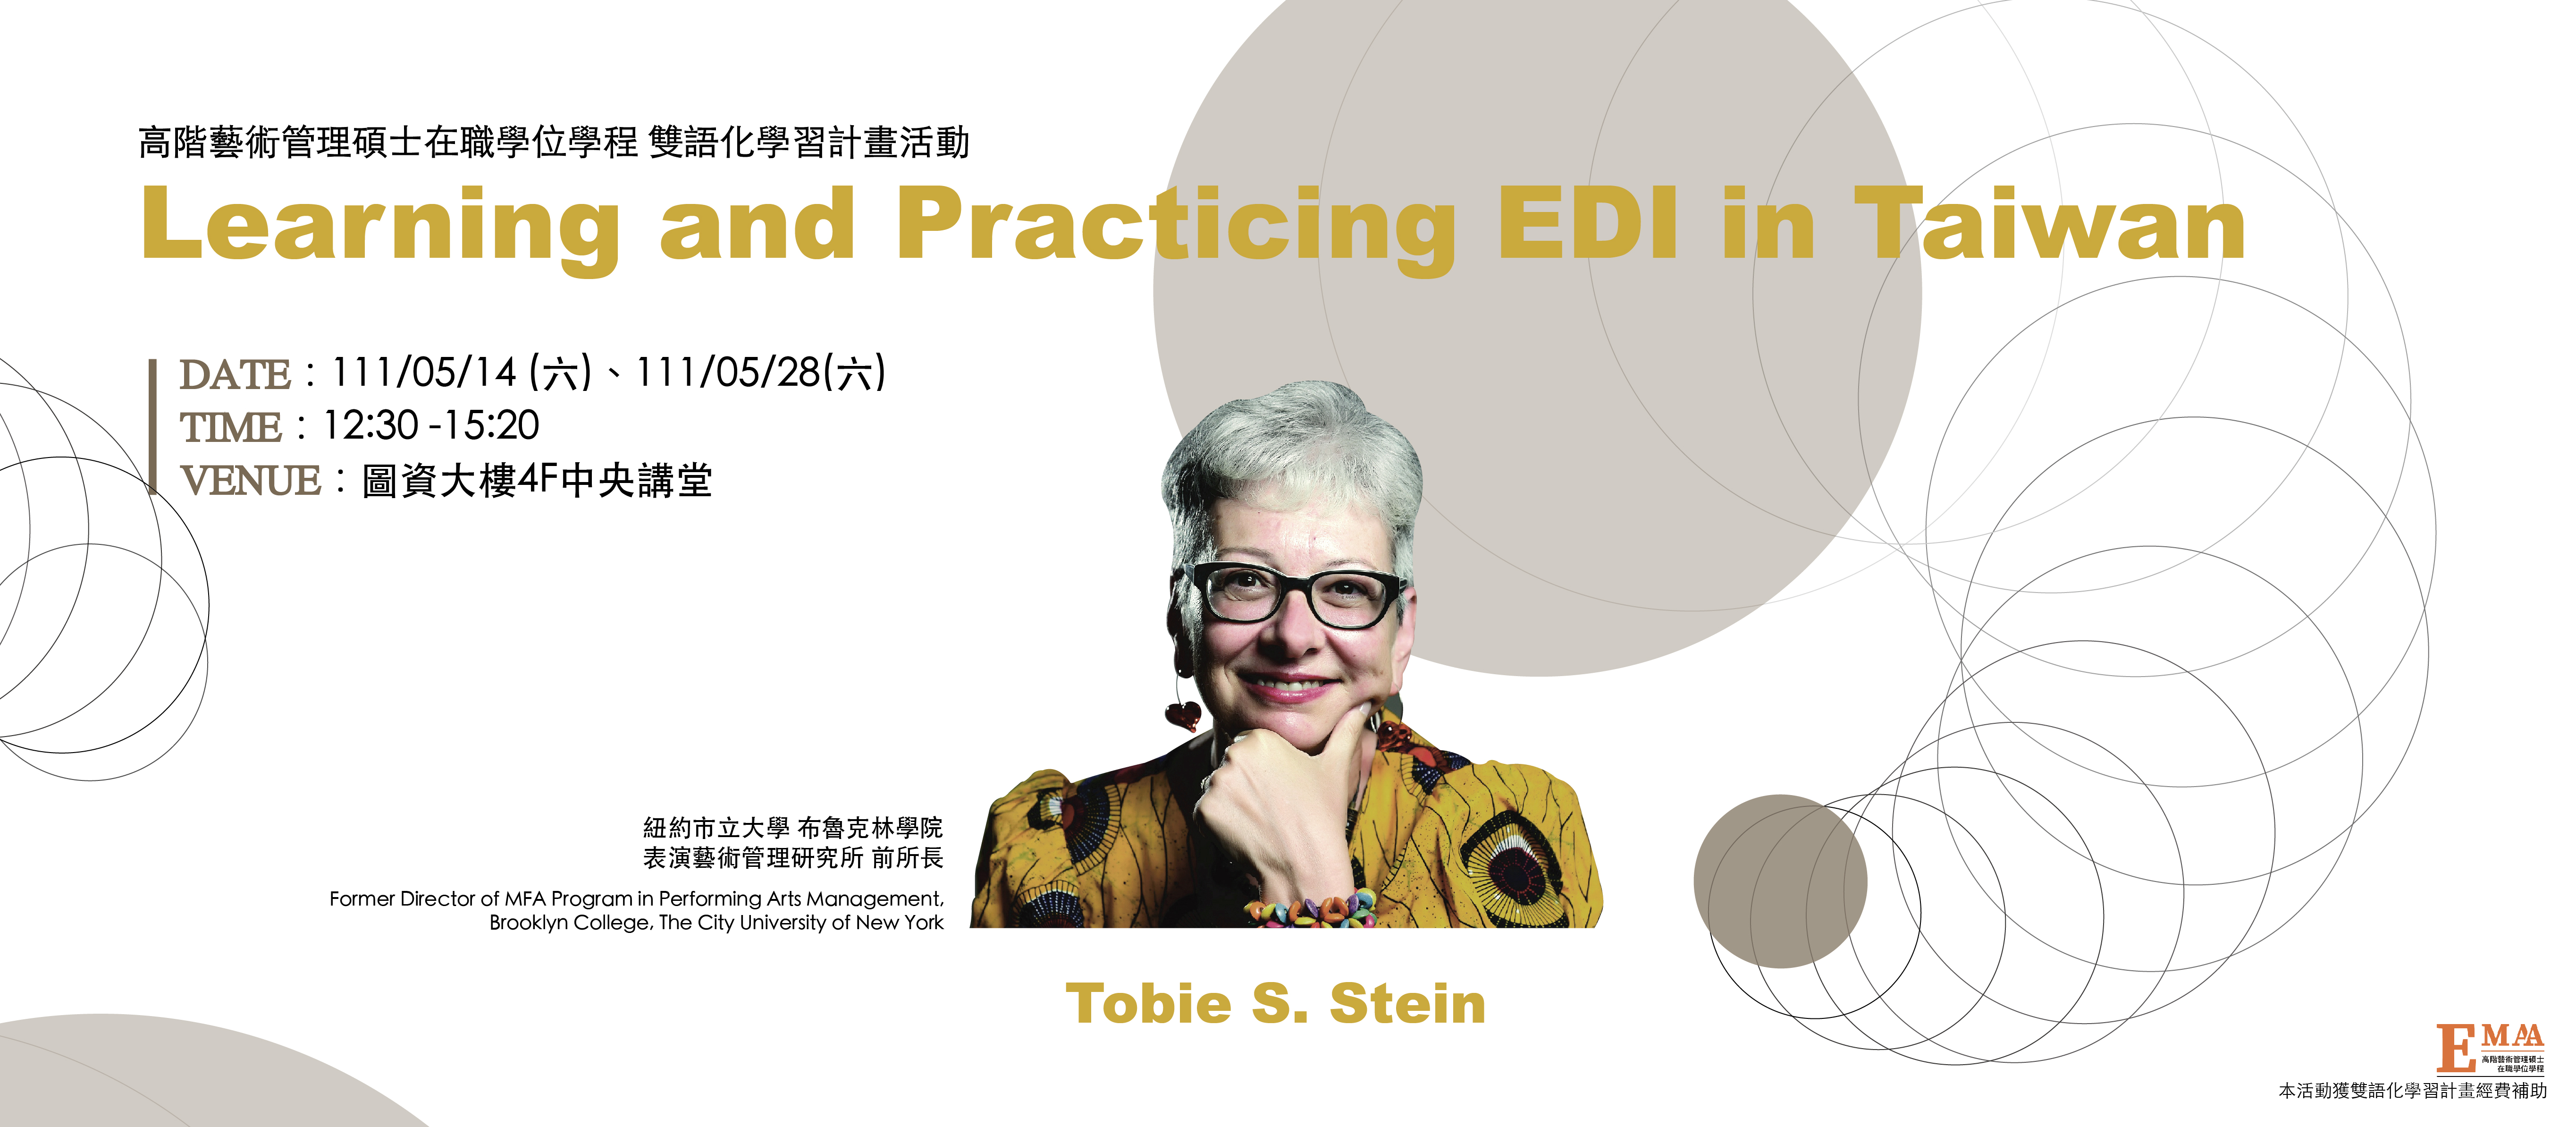 Learning and Practicing EDI in Taiwan-Tobie S. Stein 紐約市立大學布魯克林學院表演藝術管理研究所前所長